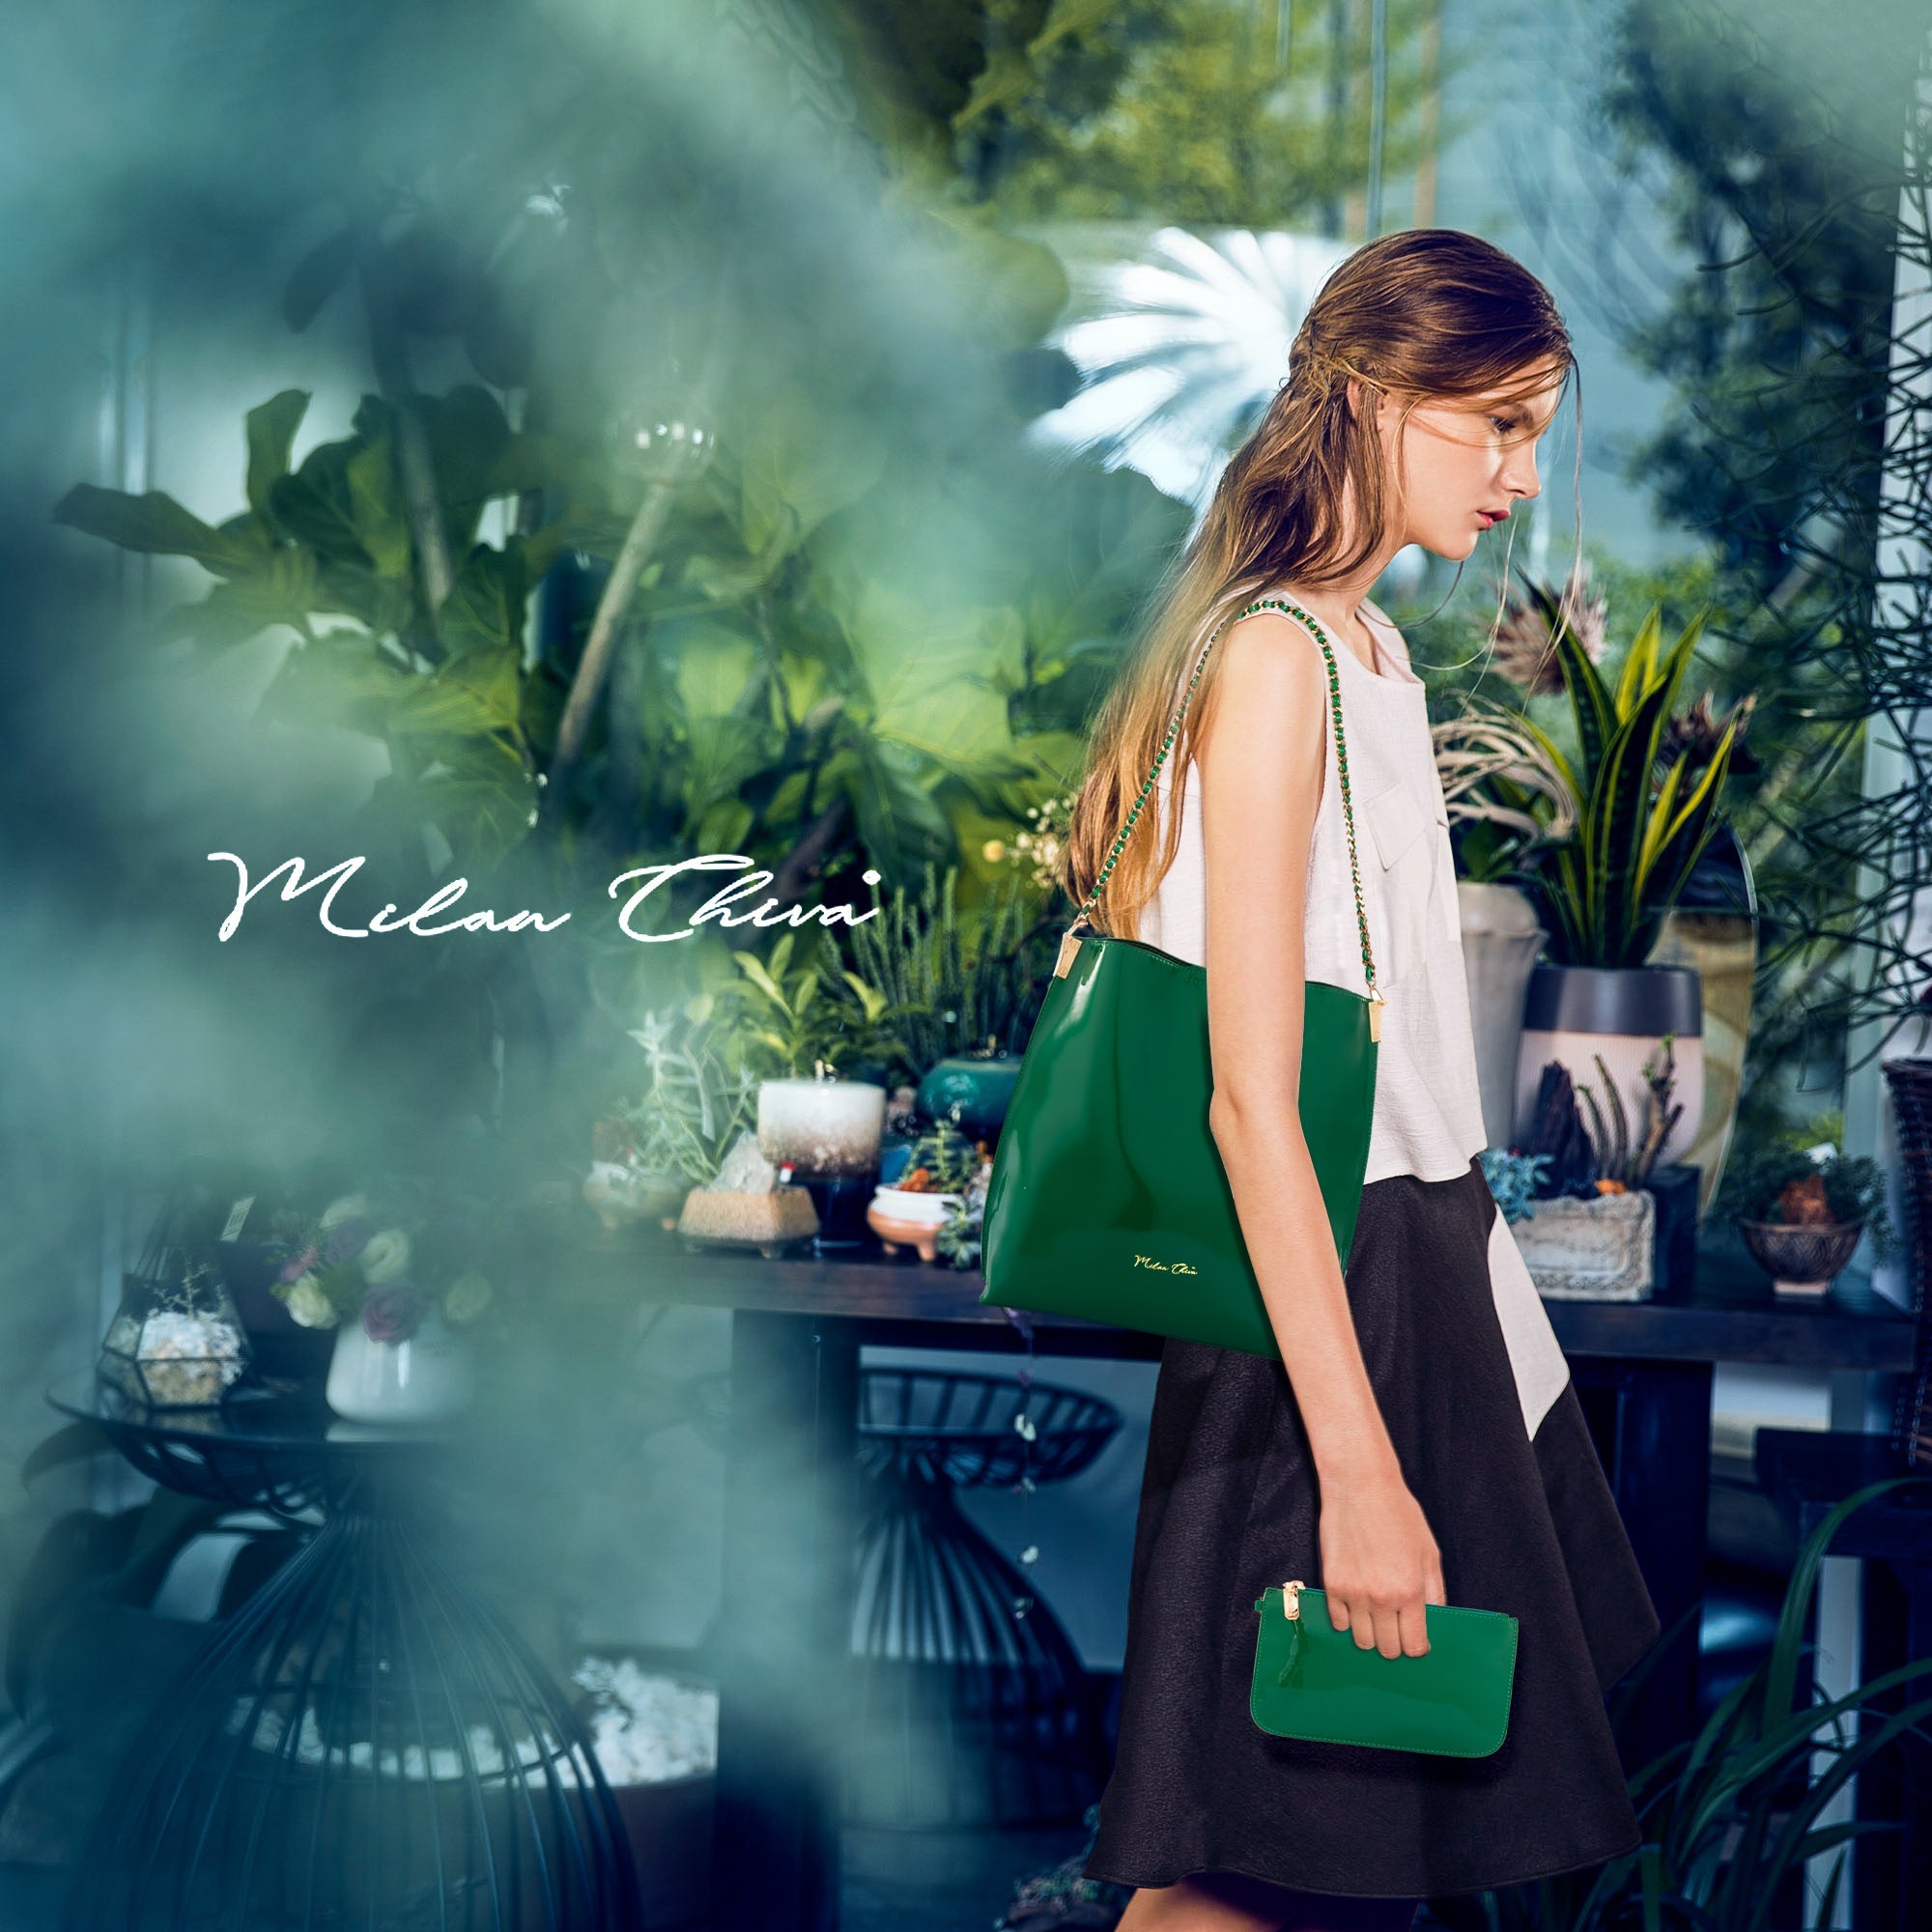 MC-1023 Milan Chiva Crossbody Fashion Tote Shoulder Bag - Cowgirl Wear